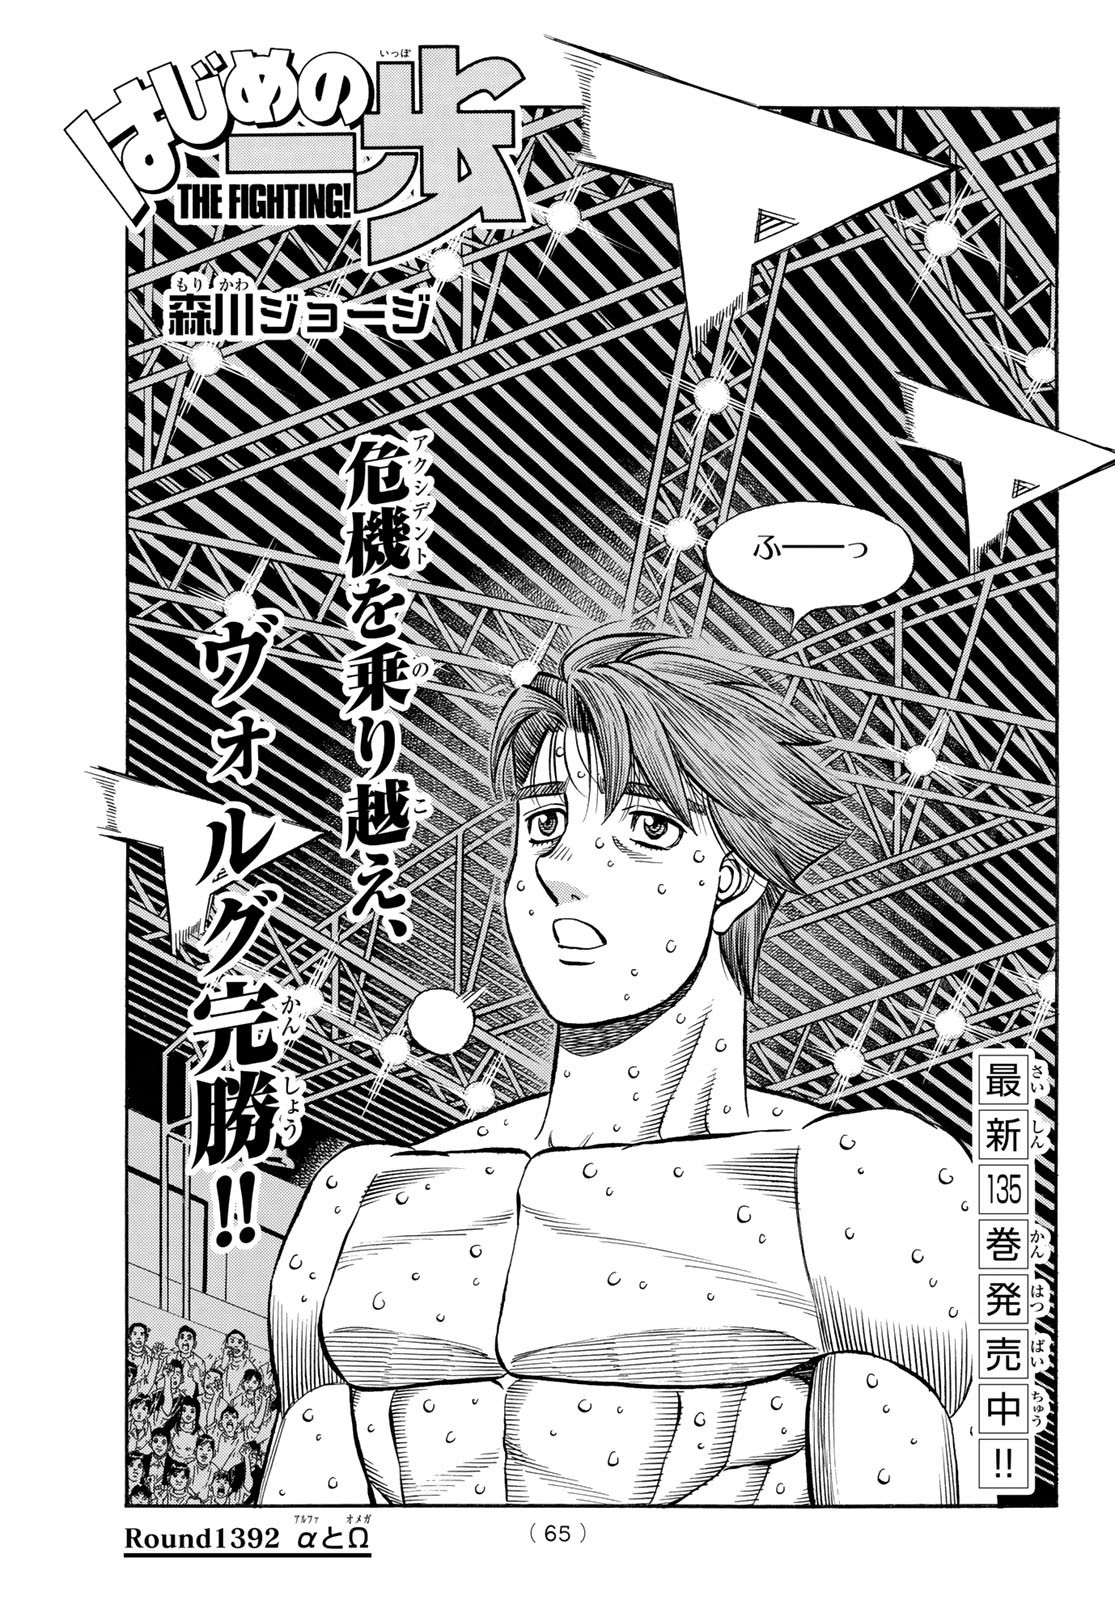 Hajime no Ippo - Chapter 1392 - Page 1